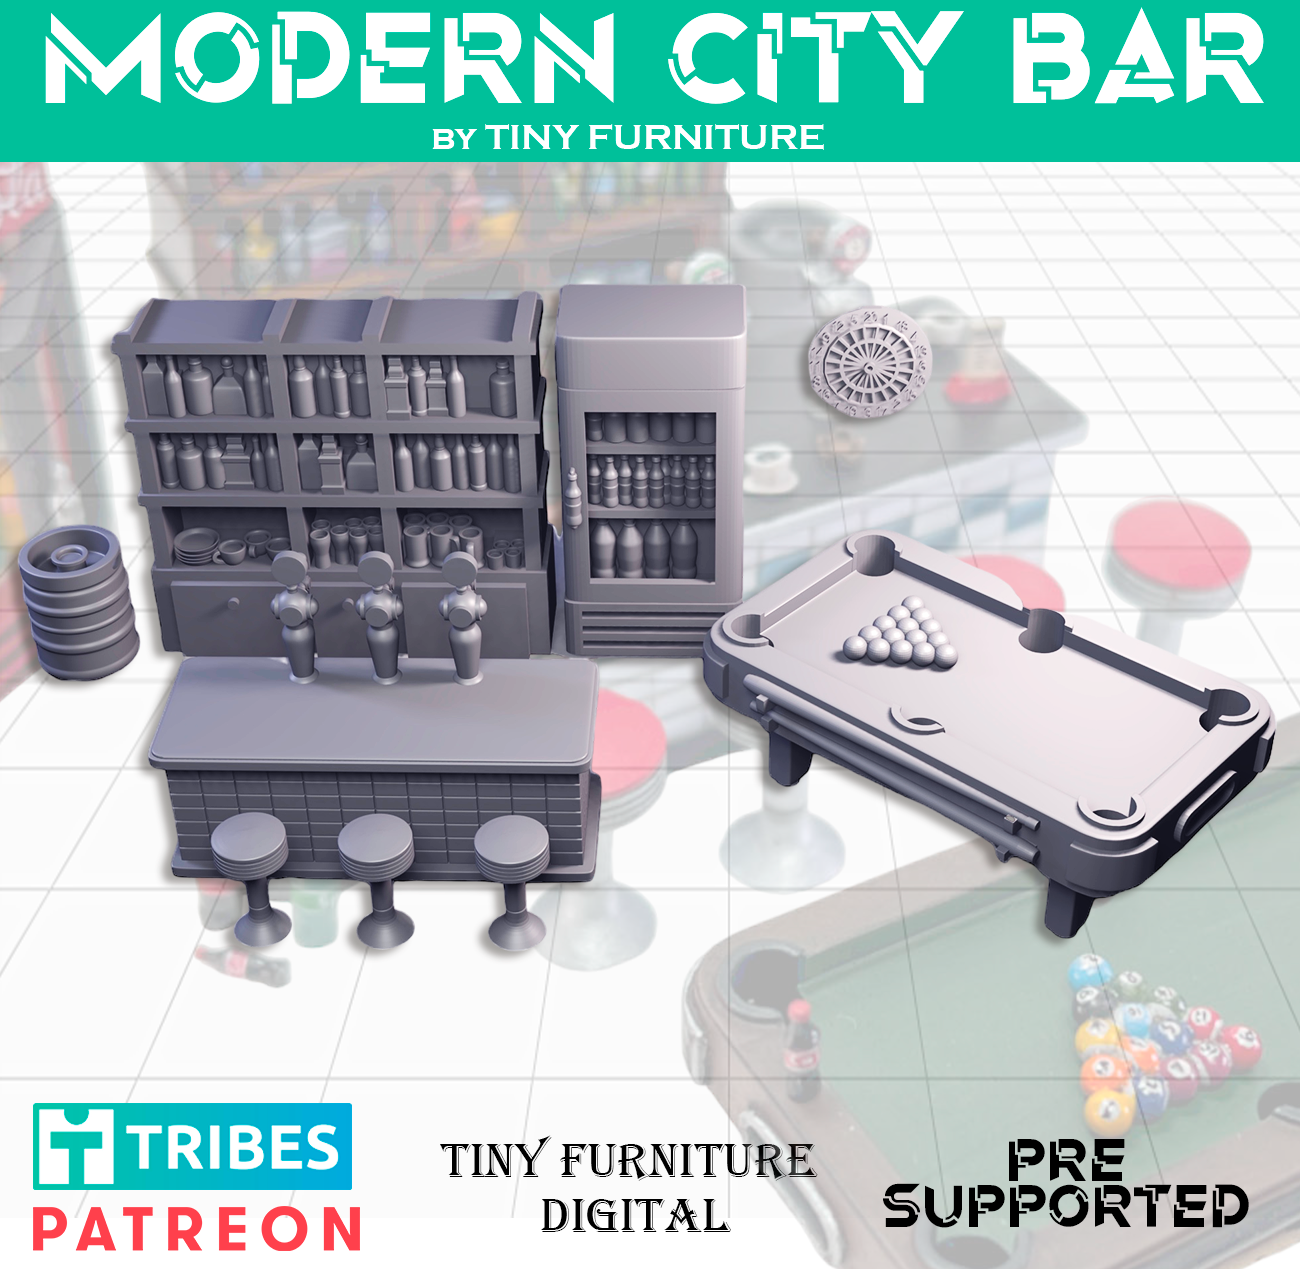 Modern city bar